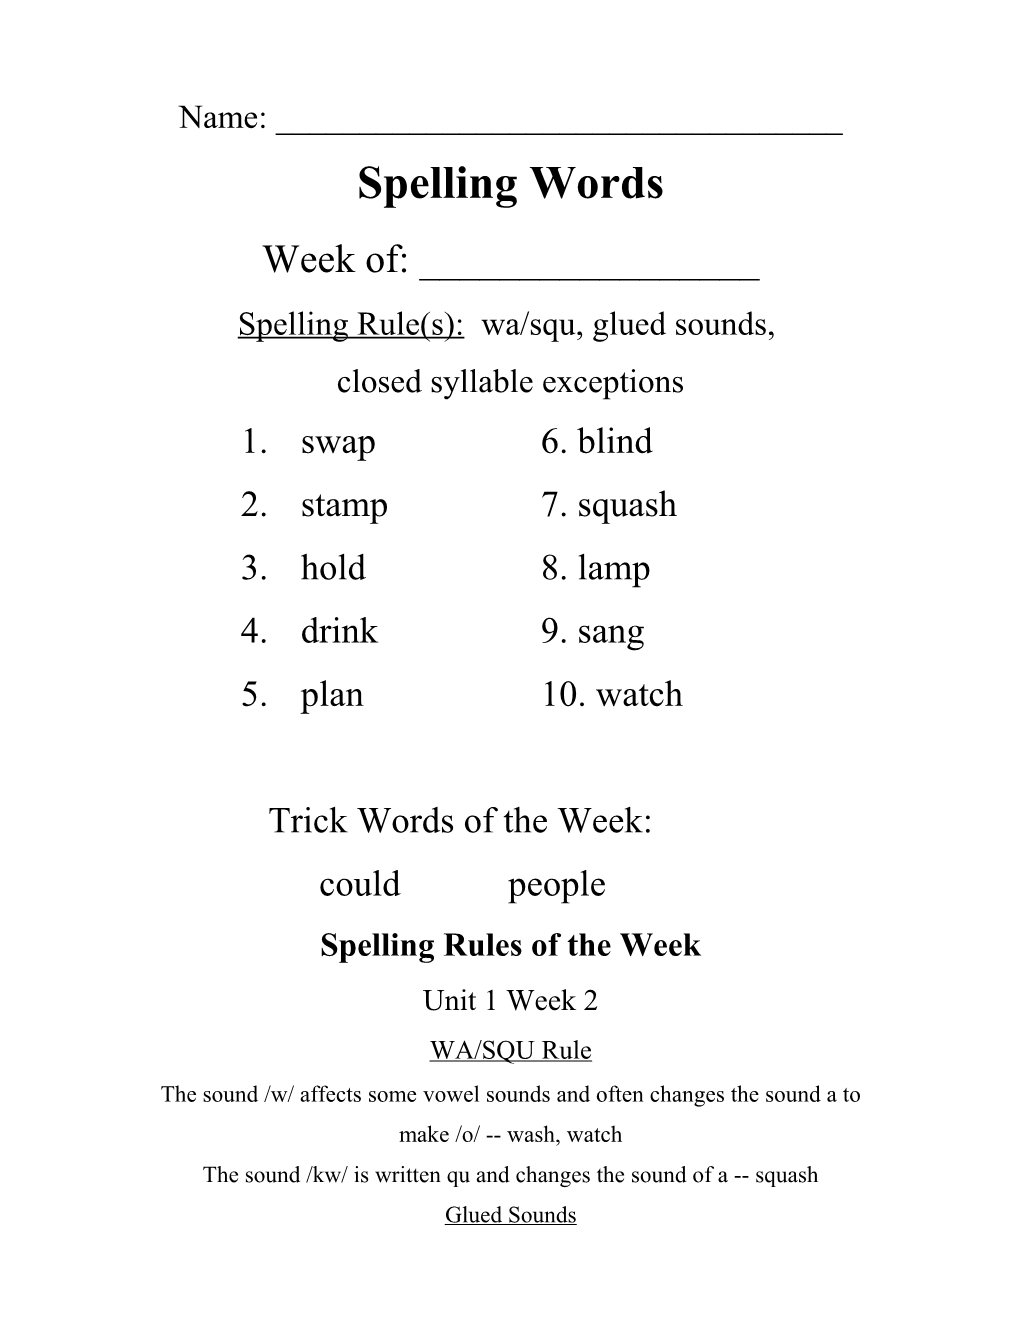 Spelling Rule(S): Wa/Squ, Glued Sounds